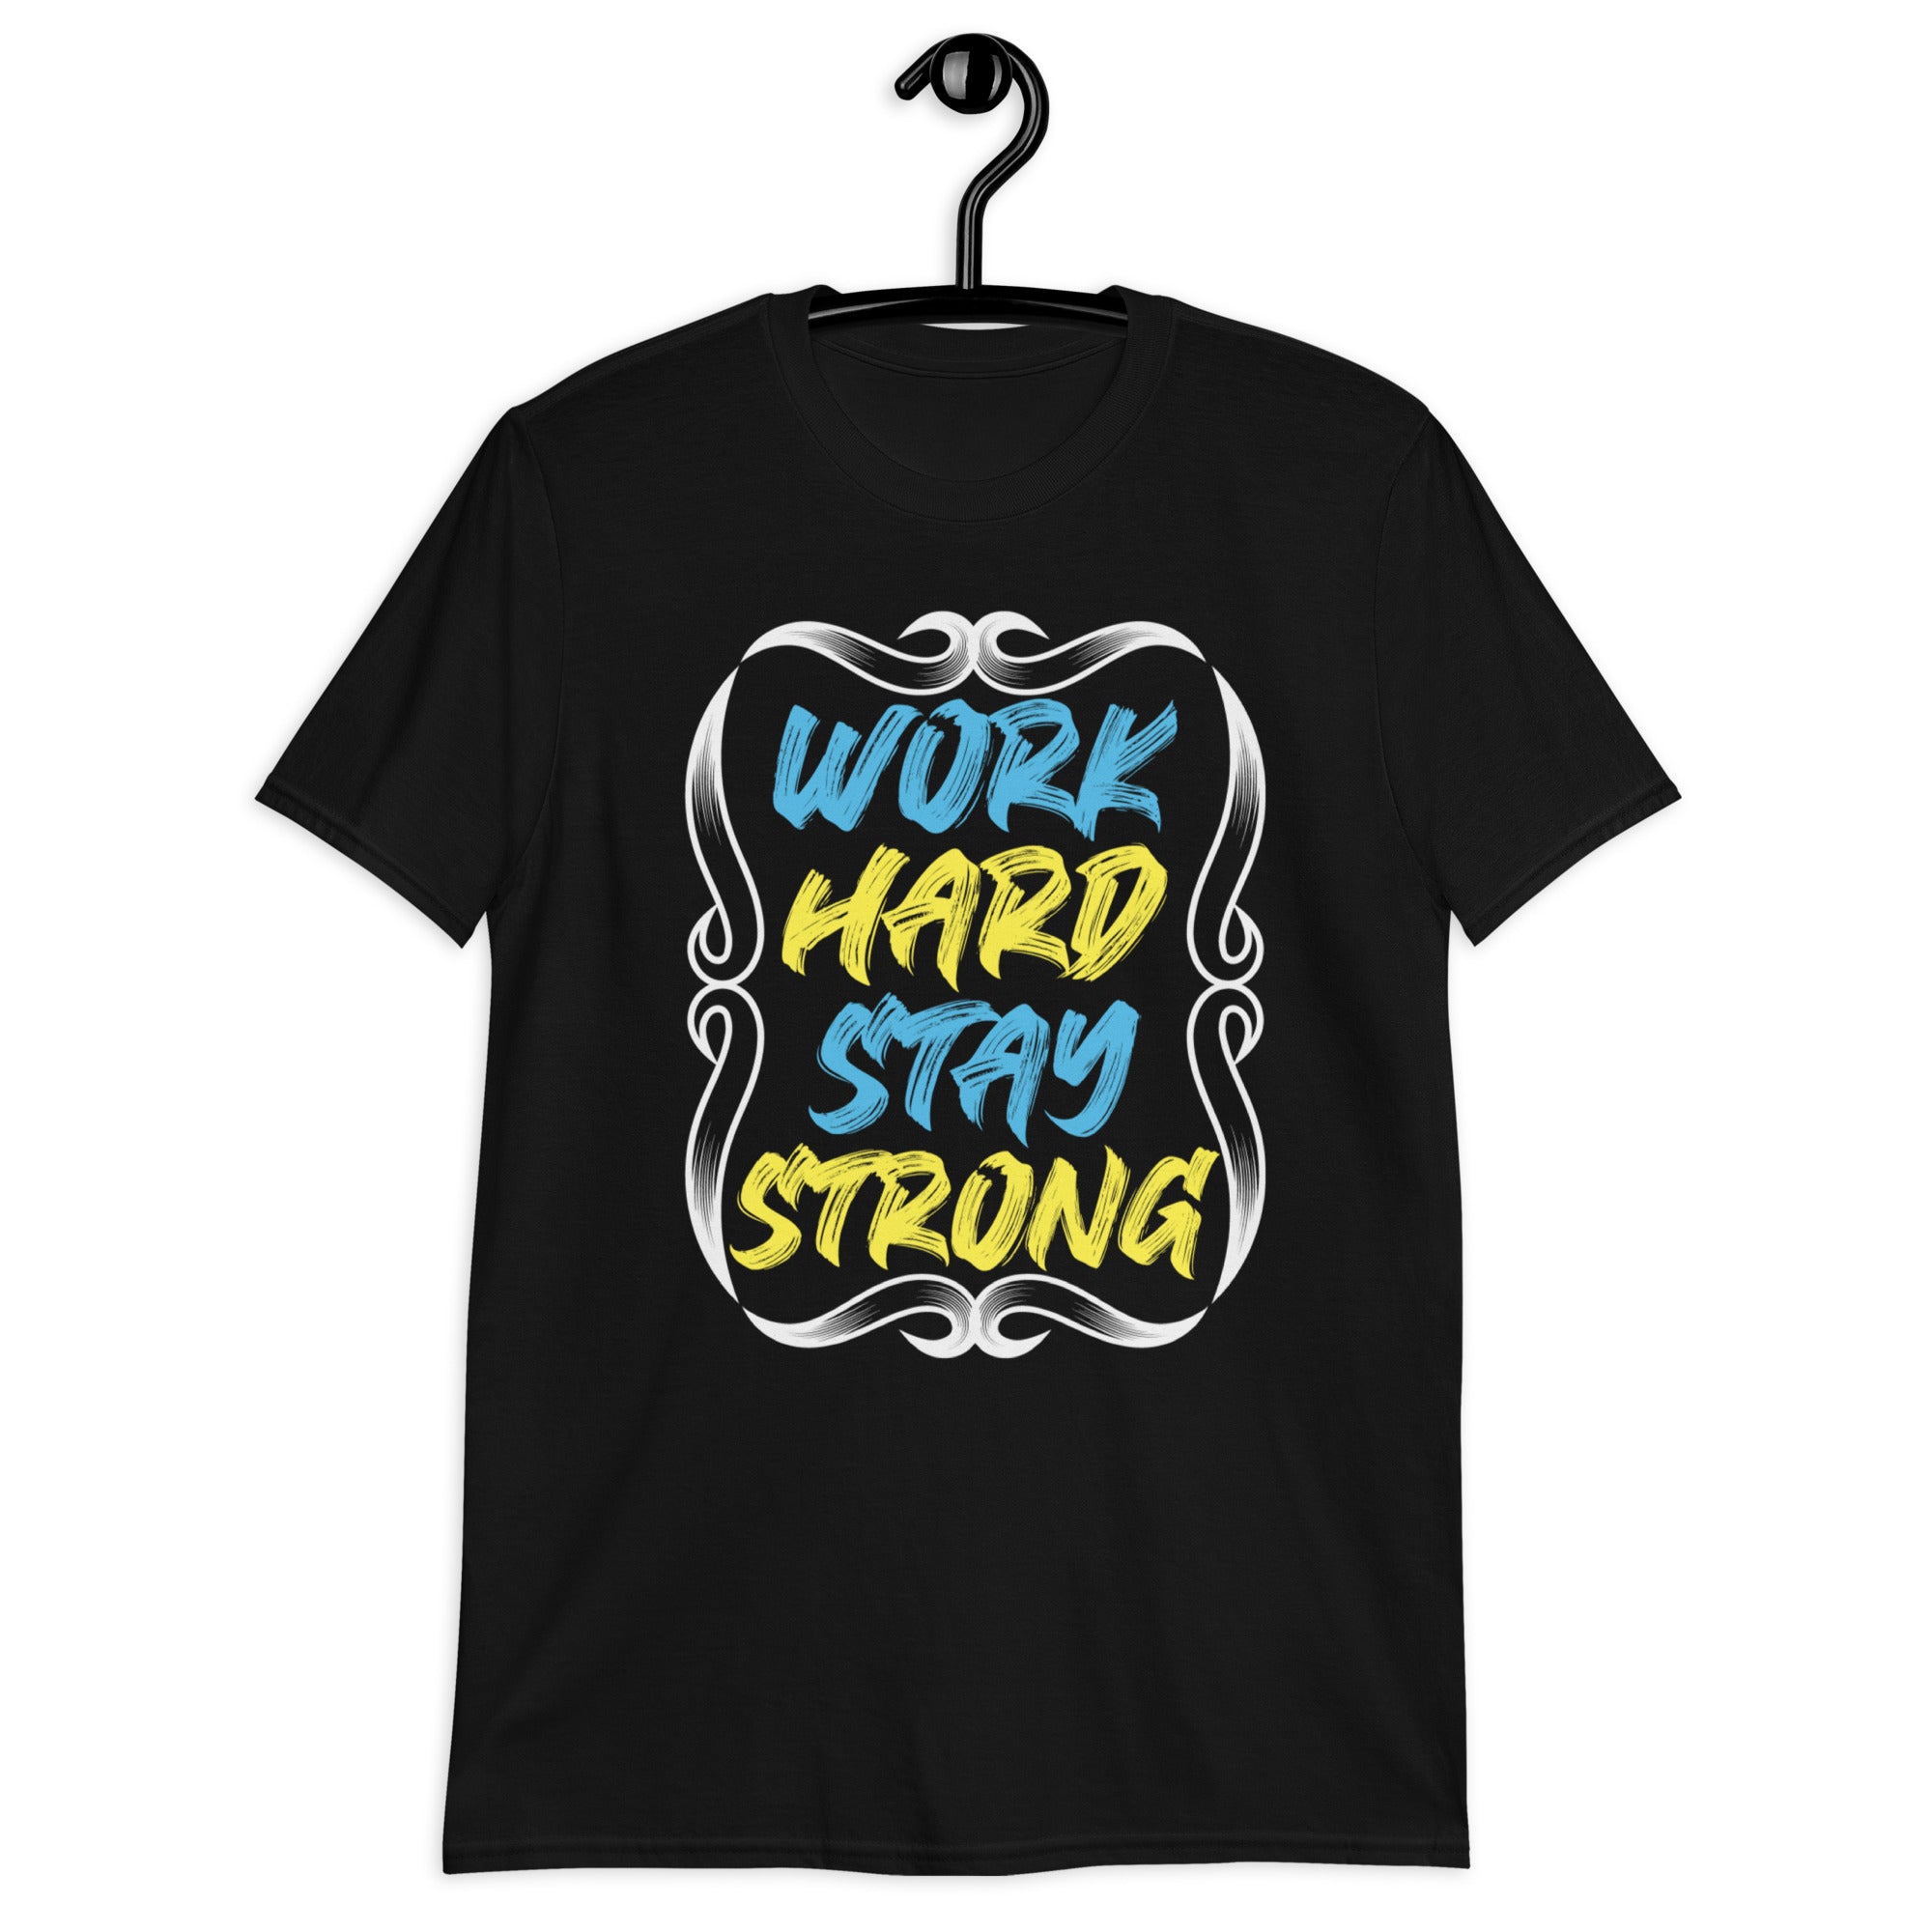 Work Hard Stay Strong - Short-Sleeve Unisex T-Shirt